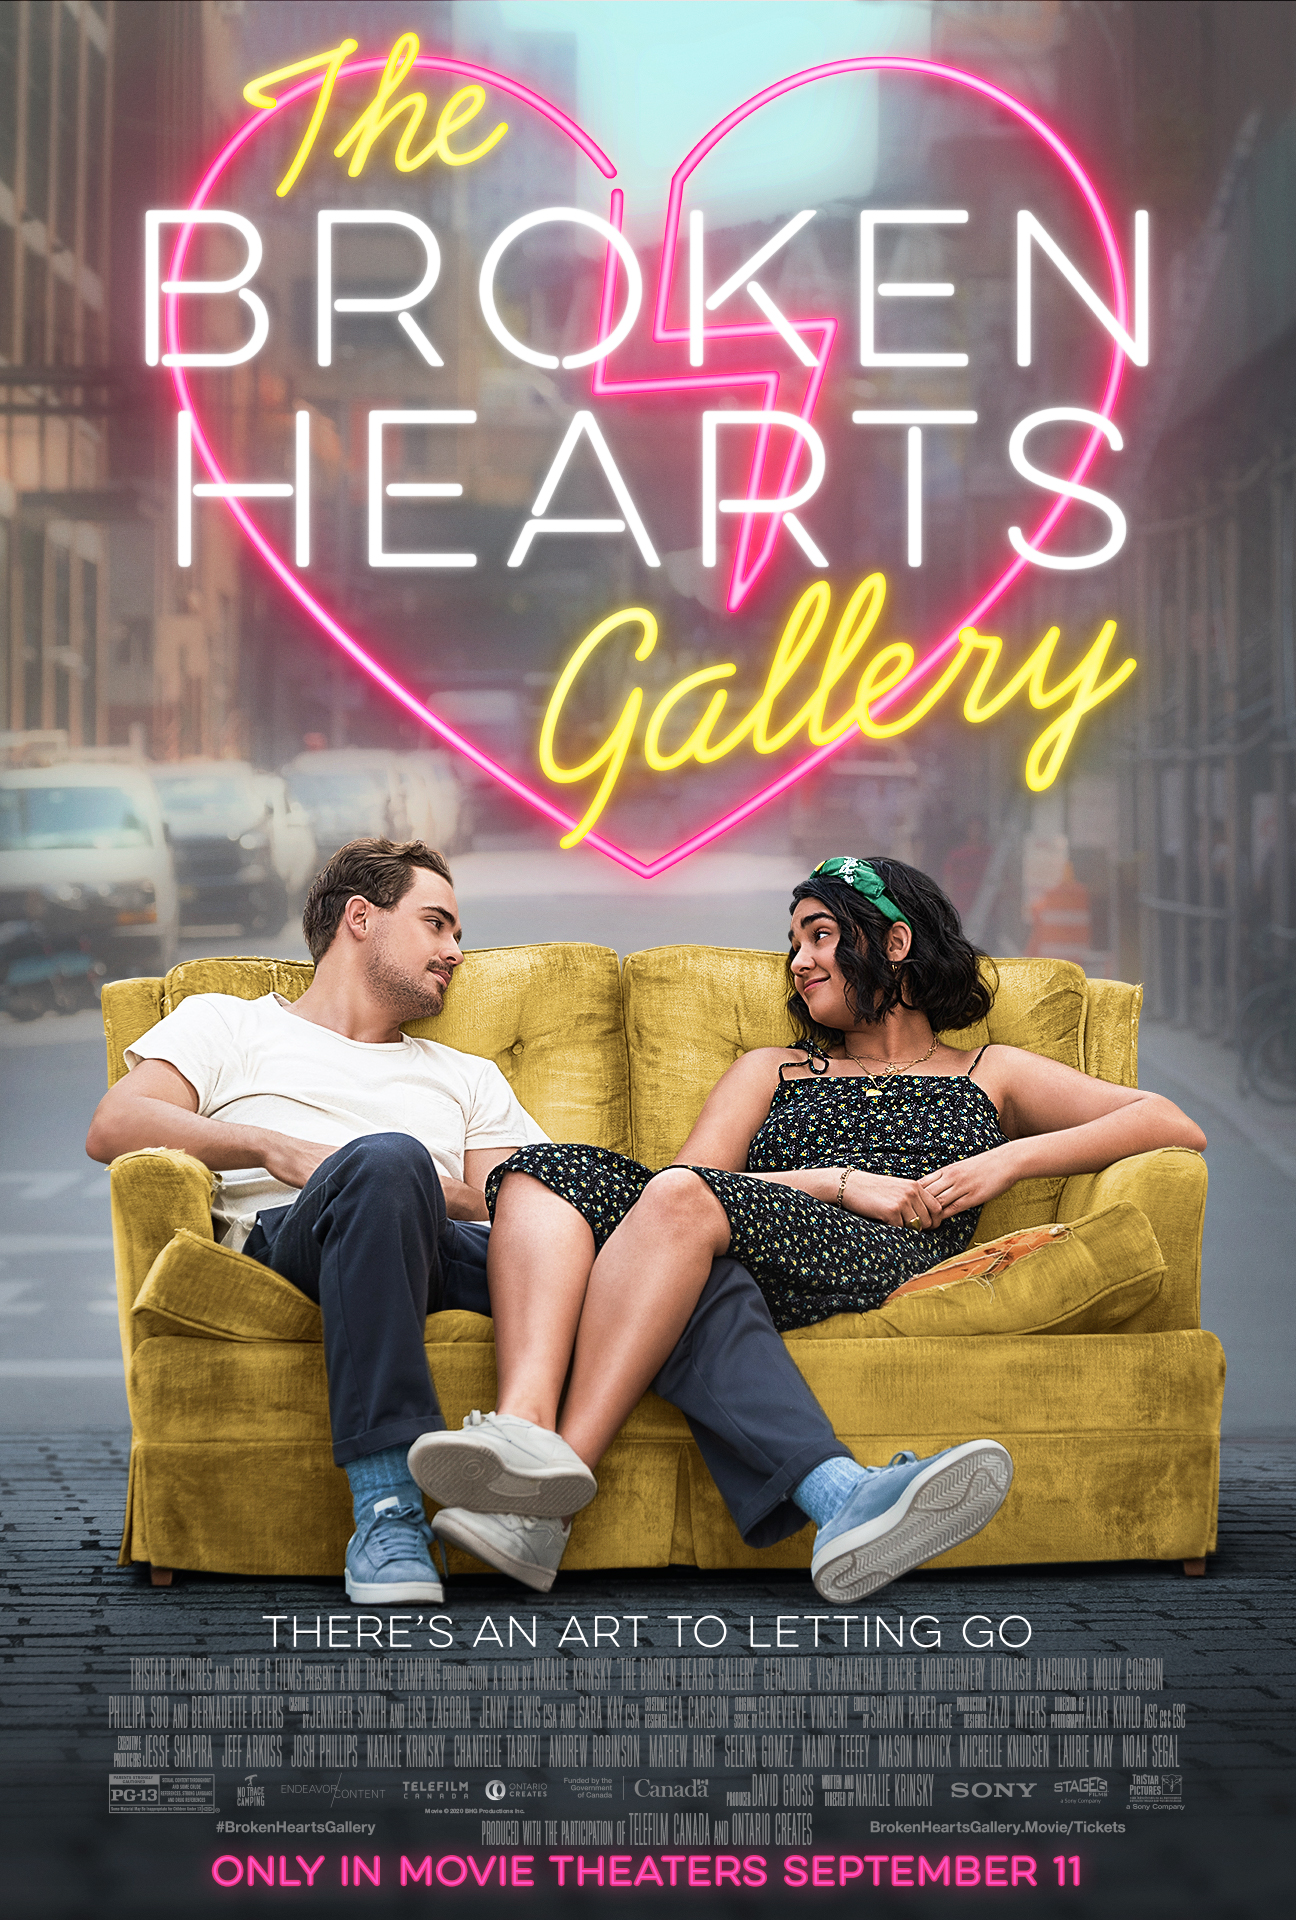 Stiahni si HD Filmy Galerie zlomenych srdci / The Broken Hearts Gallery (2020)(1080p)(CZ/EN/HU) = CSFD 57%